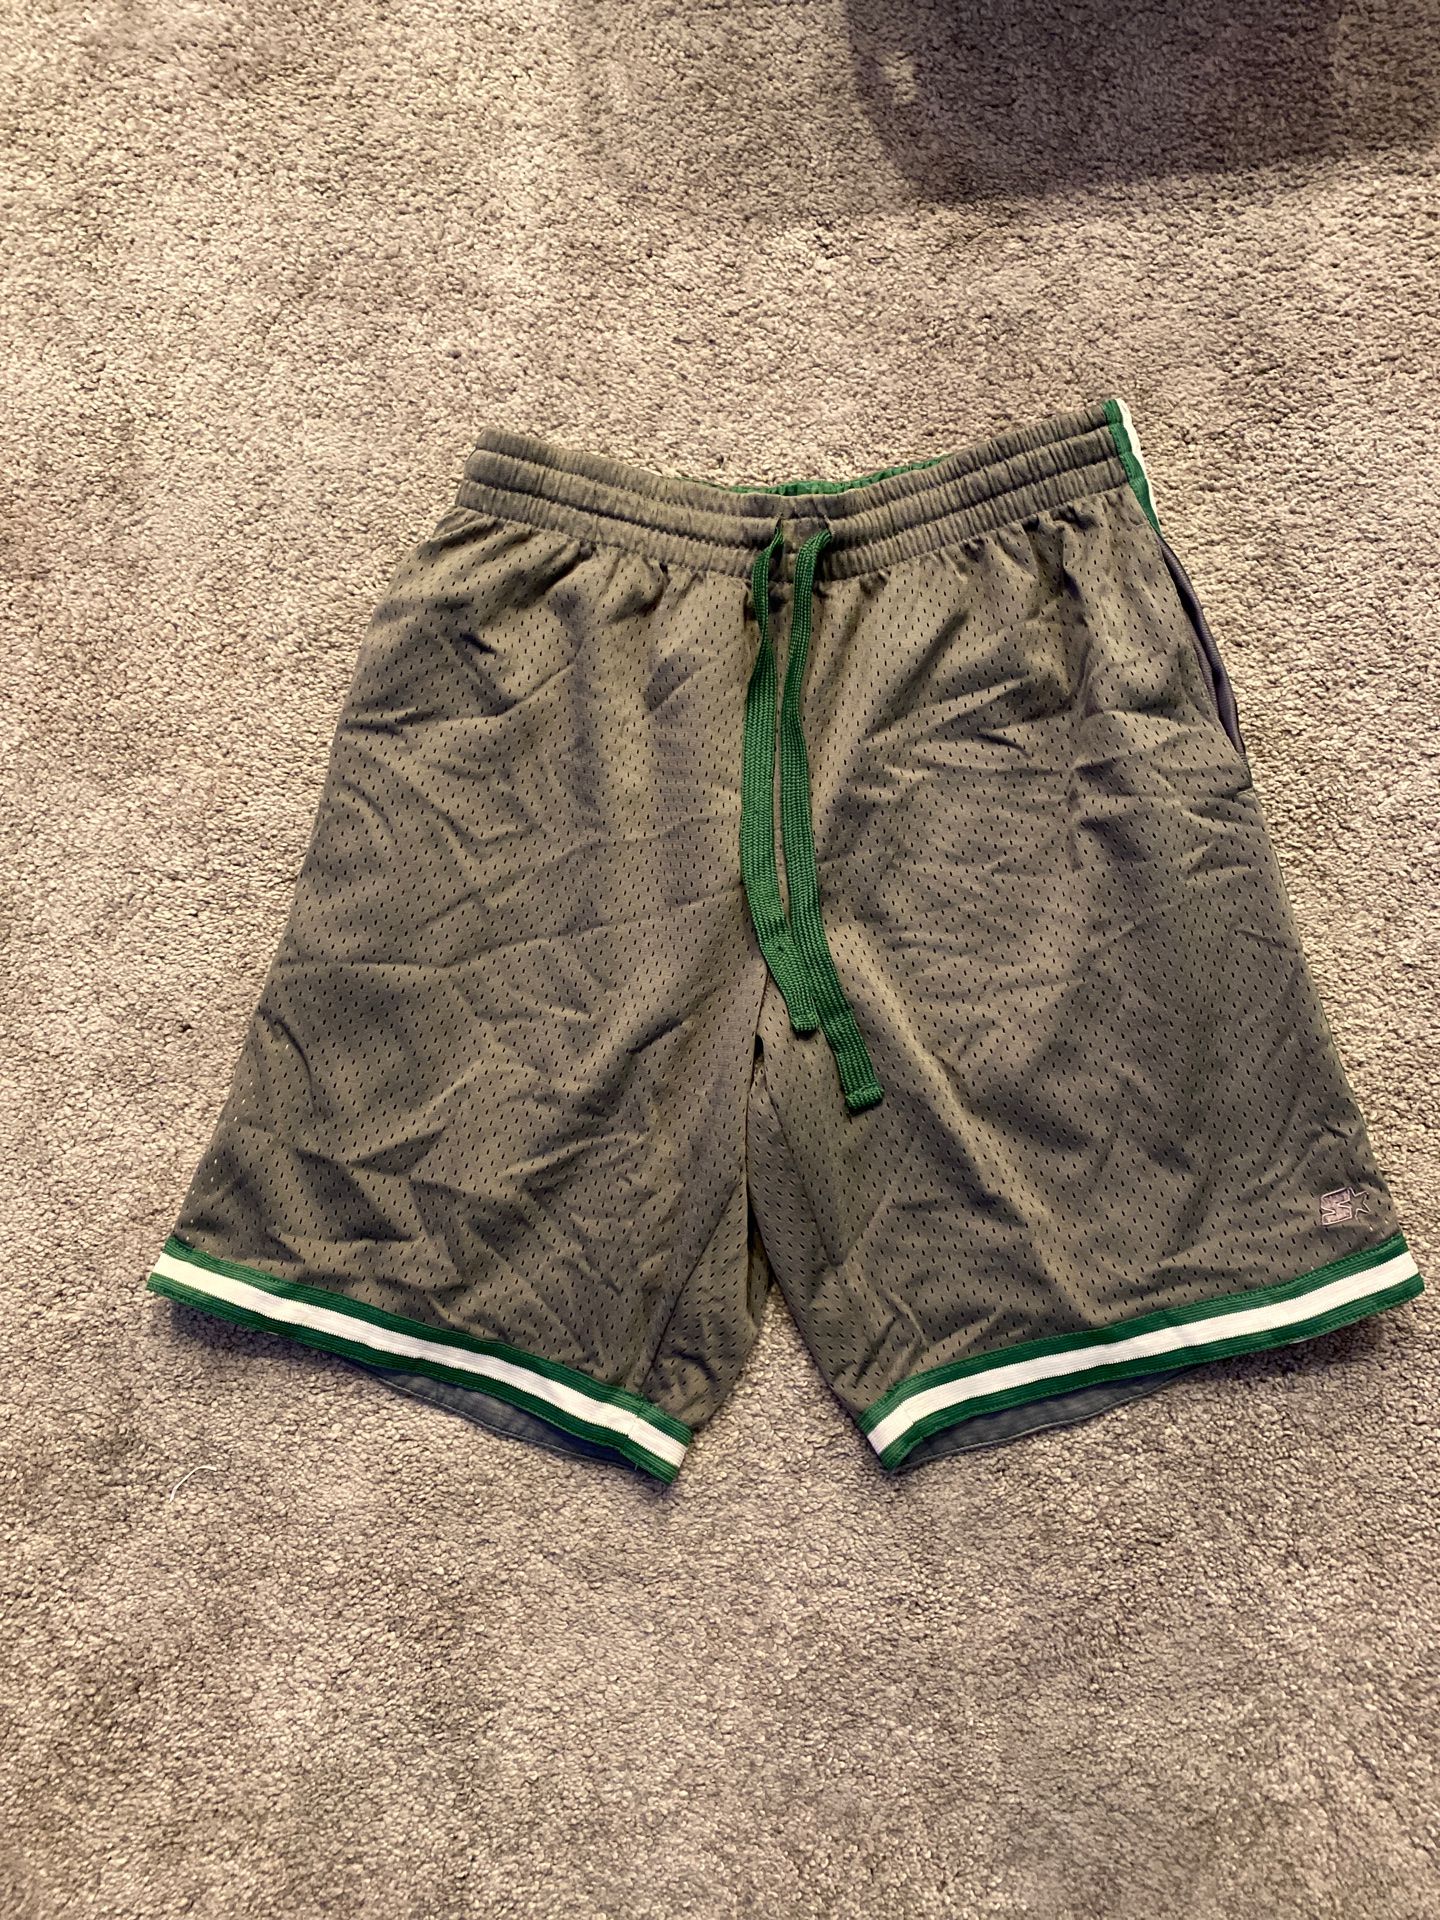 Starter - size medium - basketball reversible Celtics green nba sports mesh jersey Mitchell and Ness